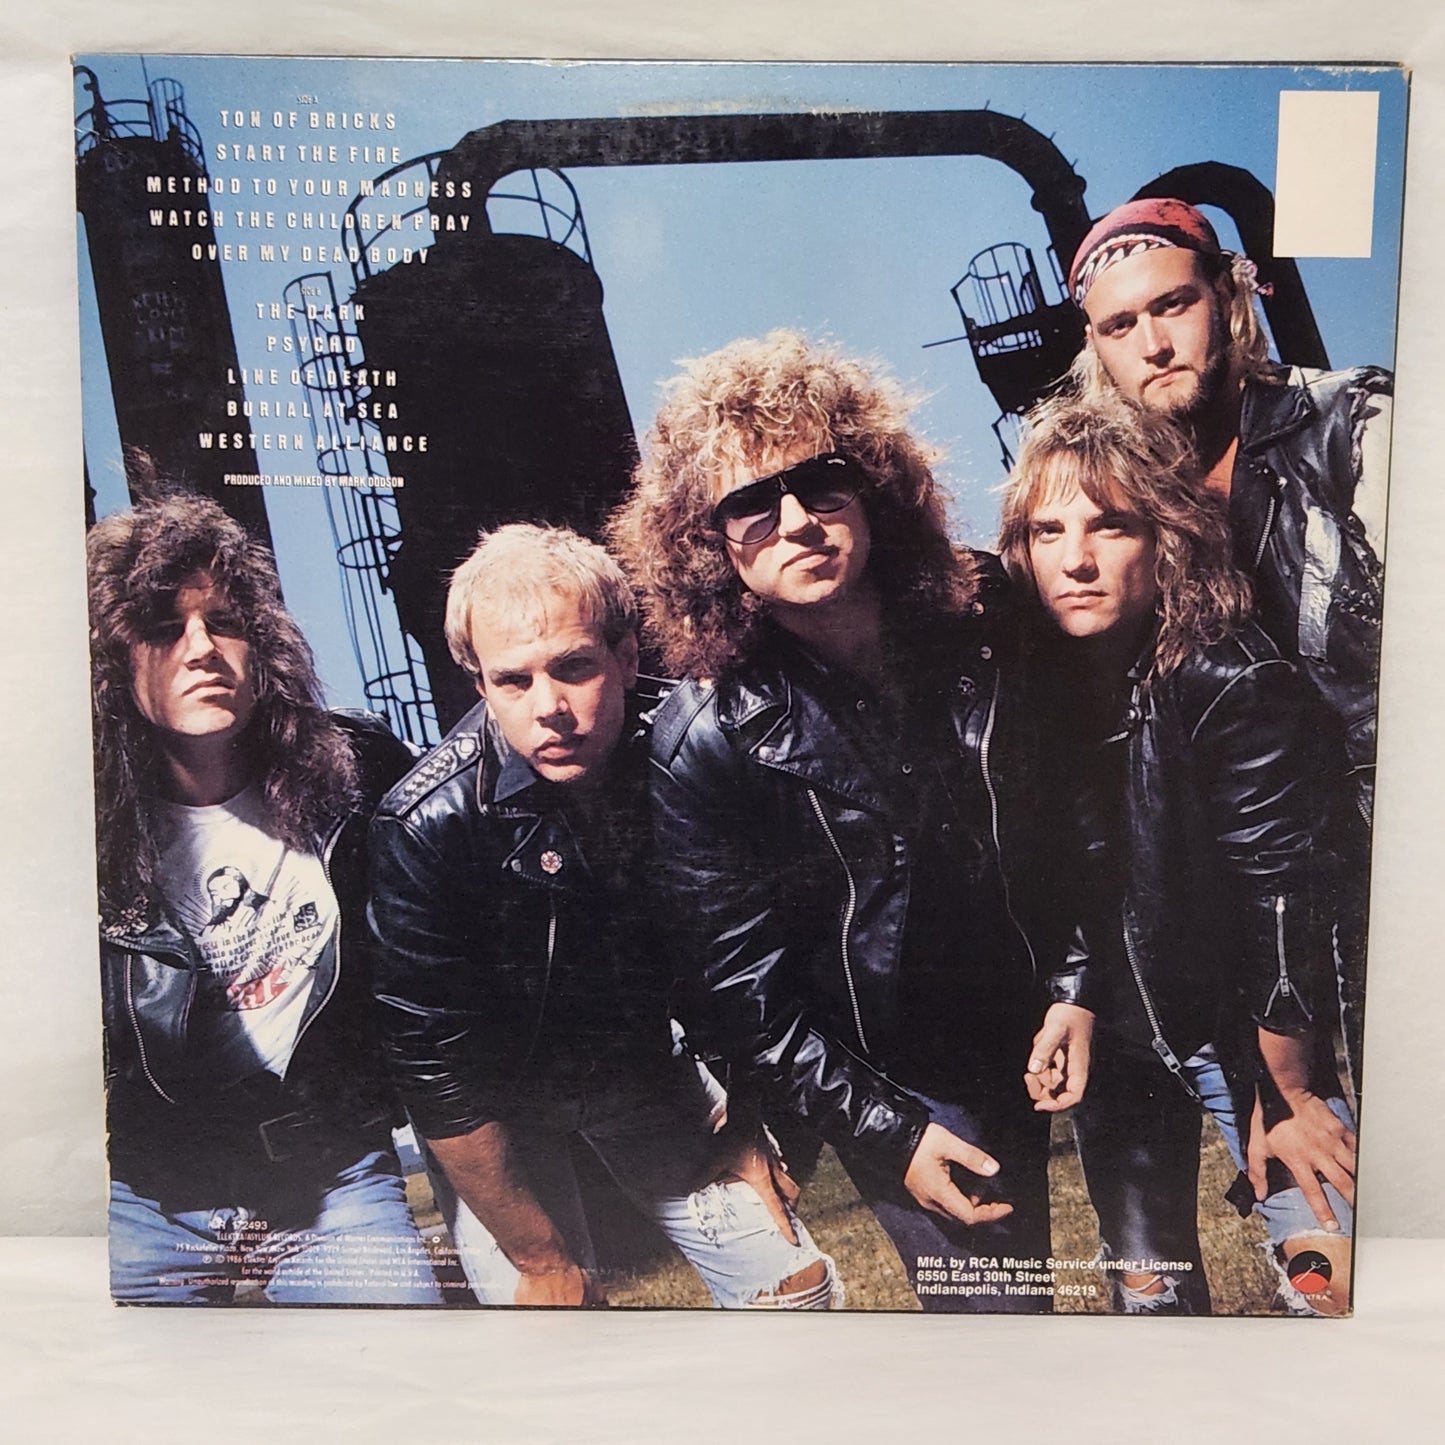 Metal Church "The Dark" 1986 Thrash Metal Record Album